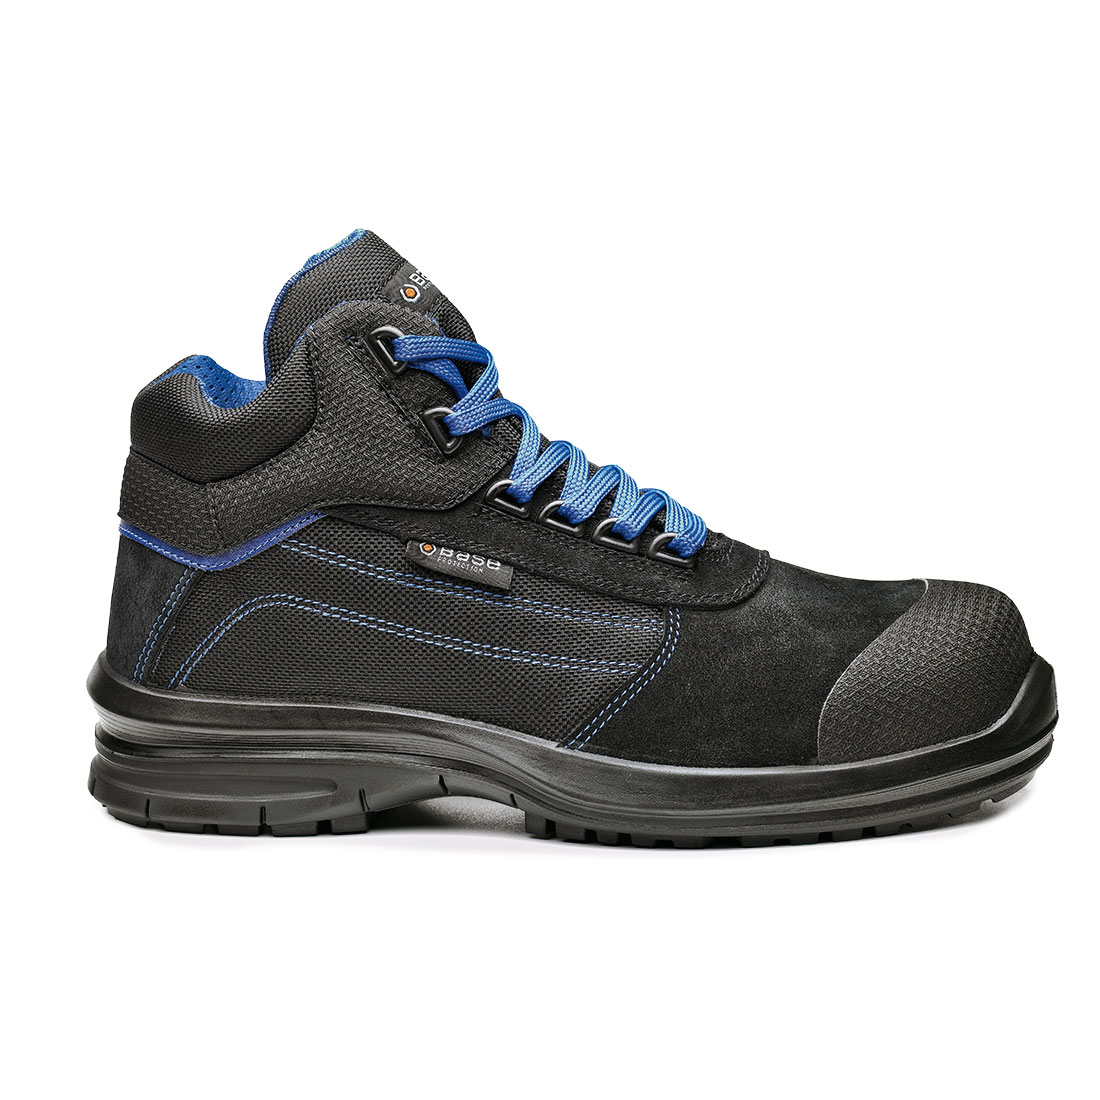 Base Pulsar Top Ankle Shoes Black/Blue B0954